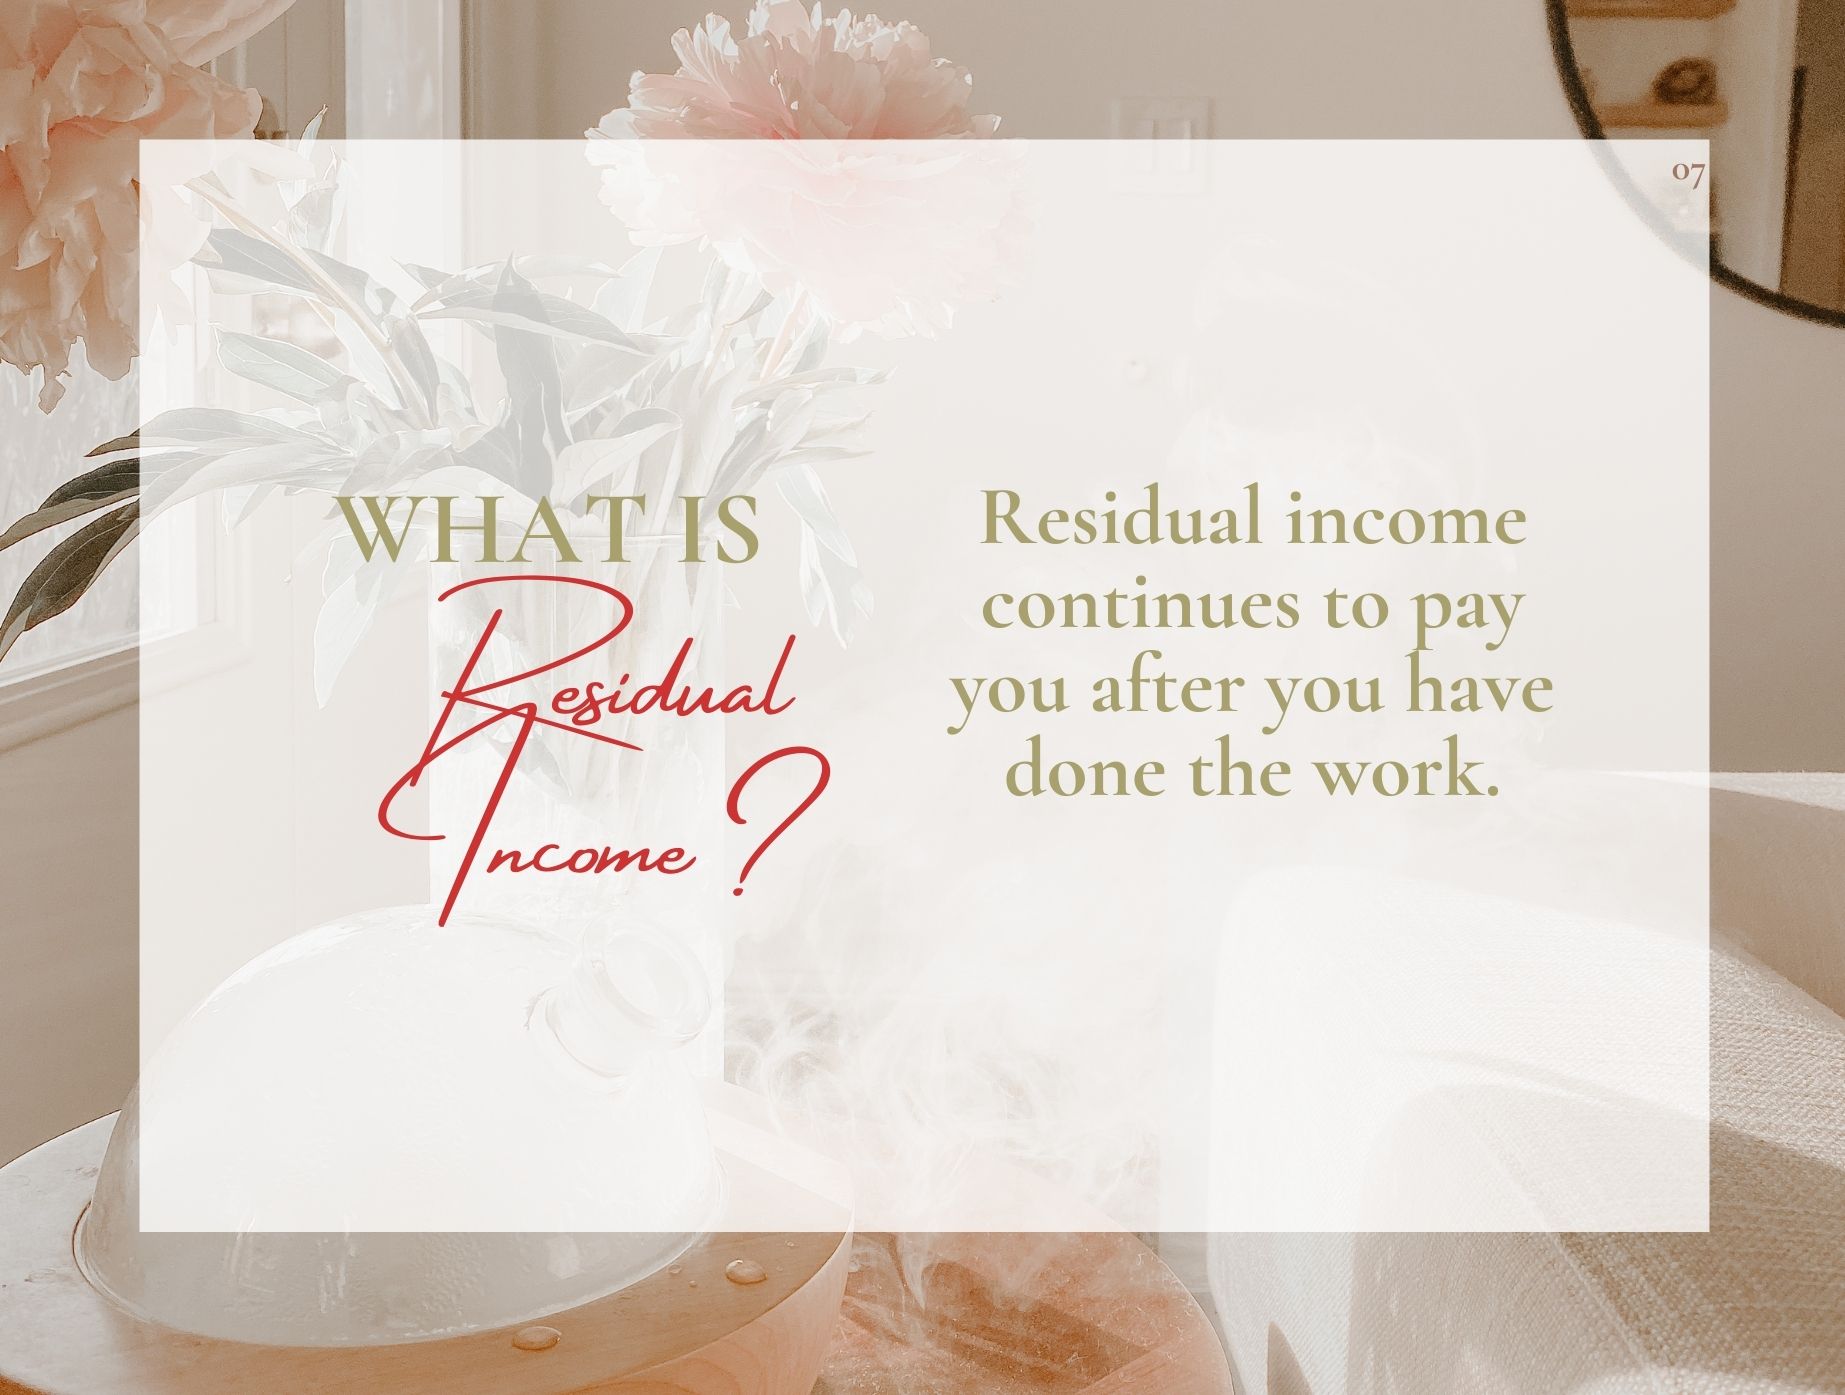 Benefits of residual income